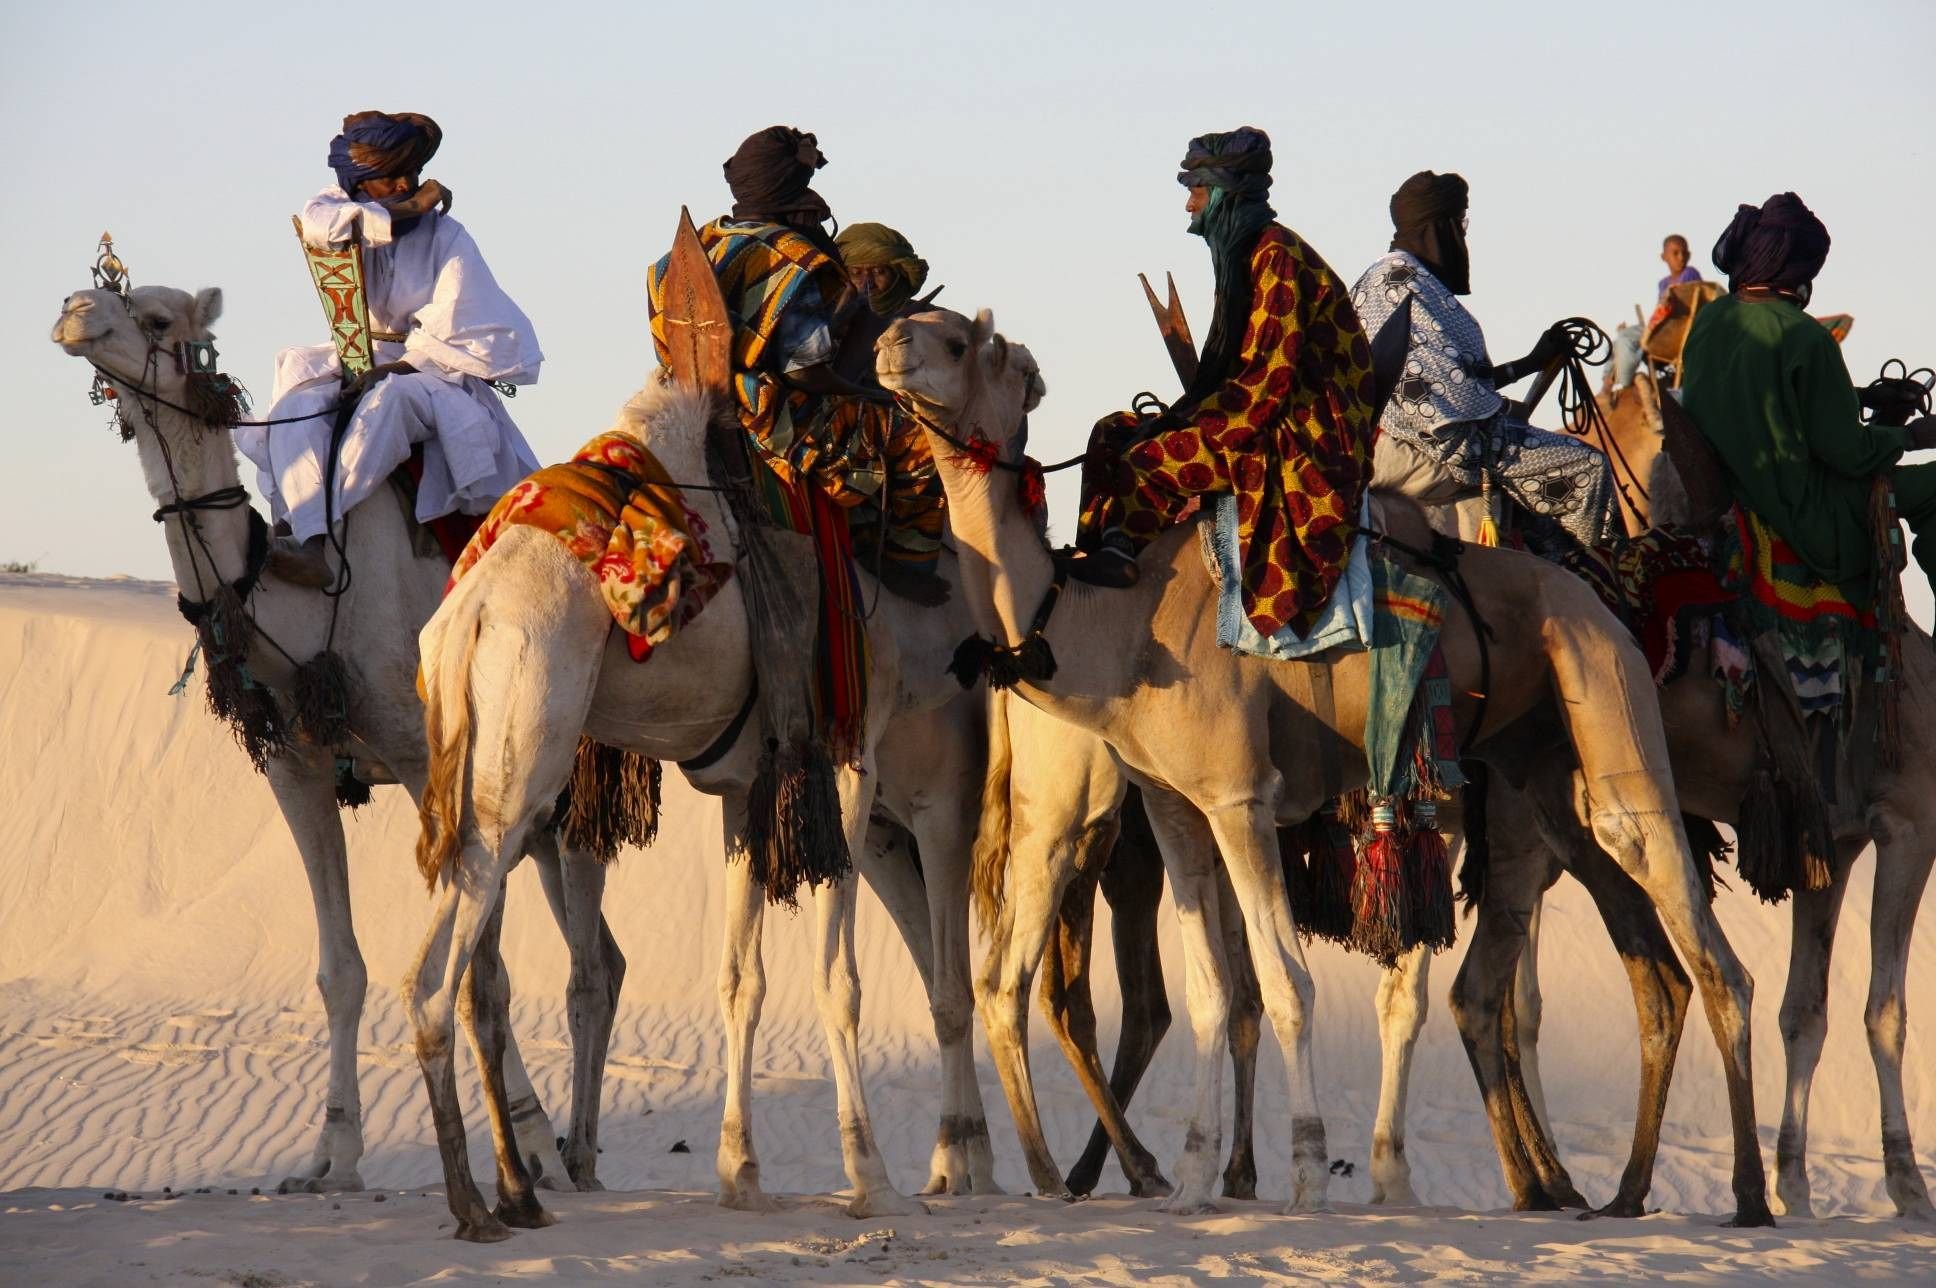 Житель северной африки 6 букв. Туарег Африка. Туареги кочевники Северной Африки. Берберы и туареги. Бедуины туареги.